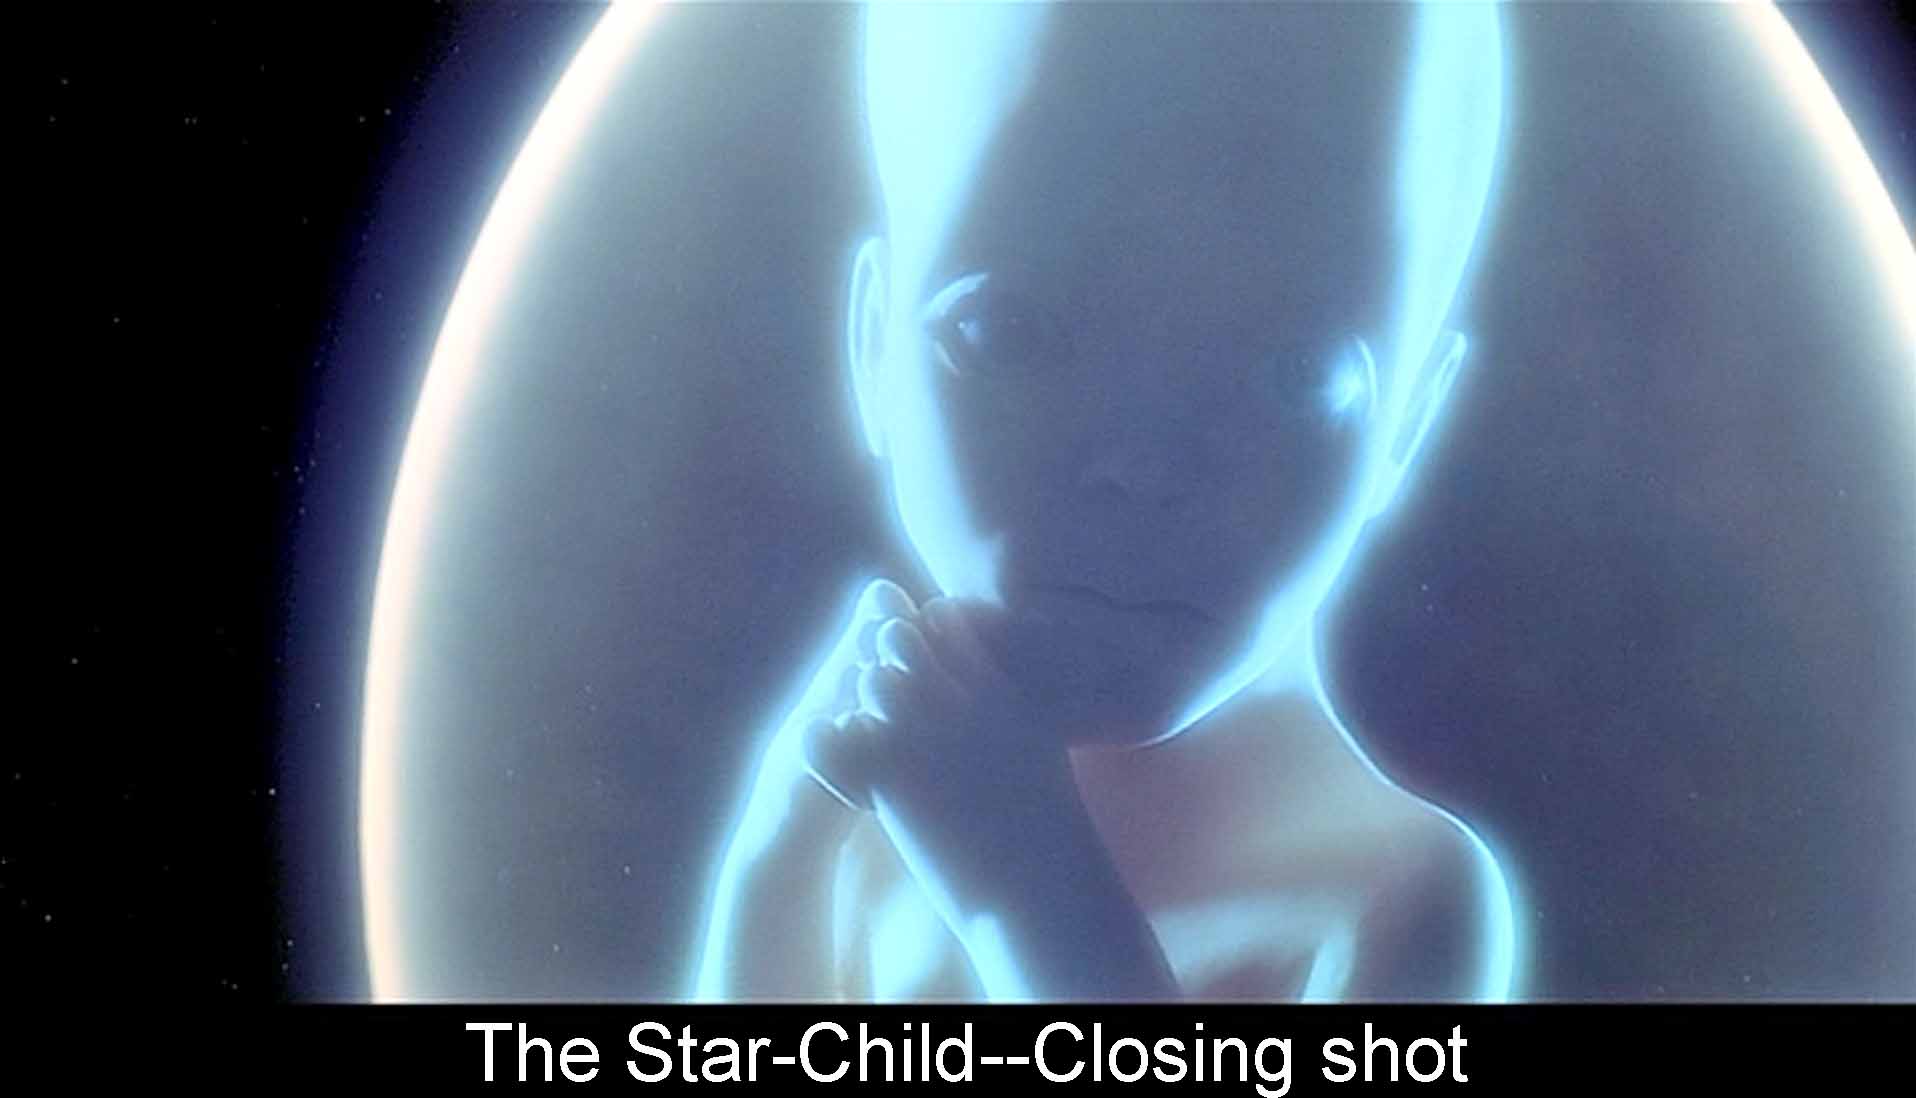 Closing shot: The Star-Child